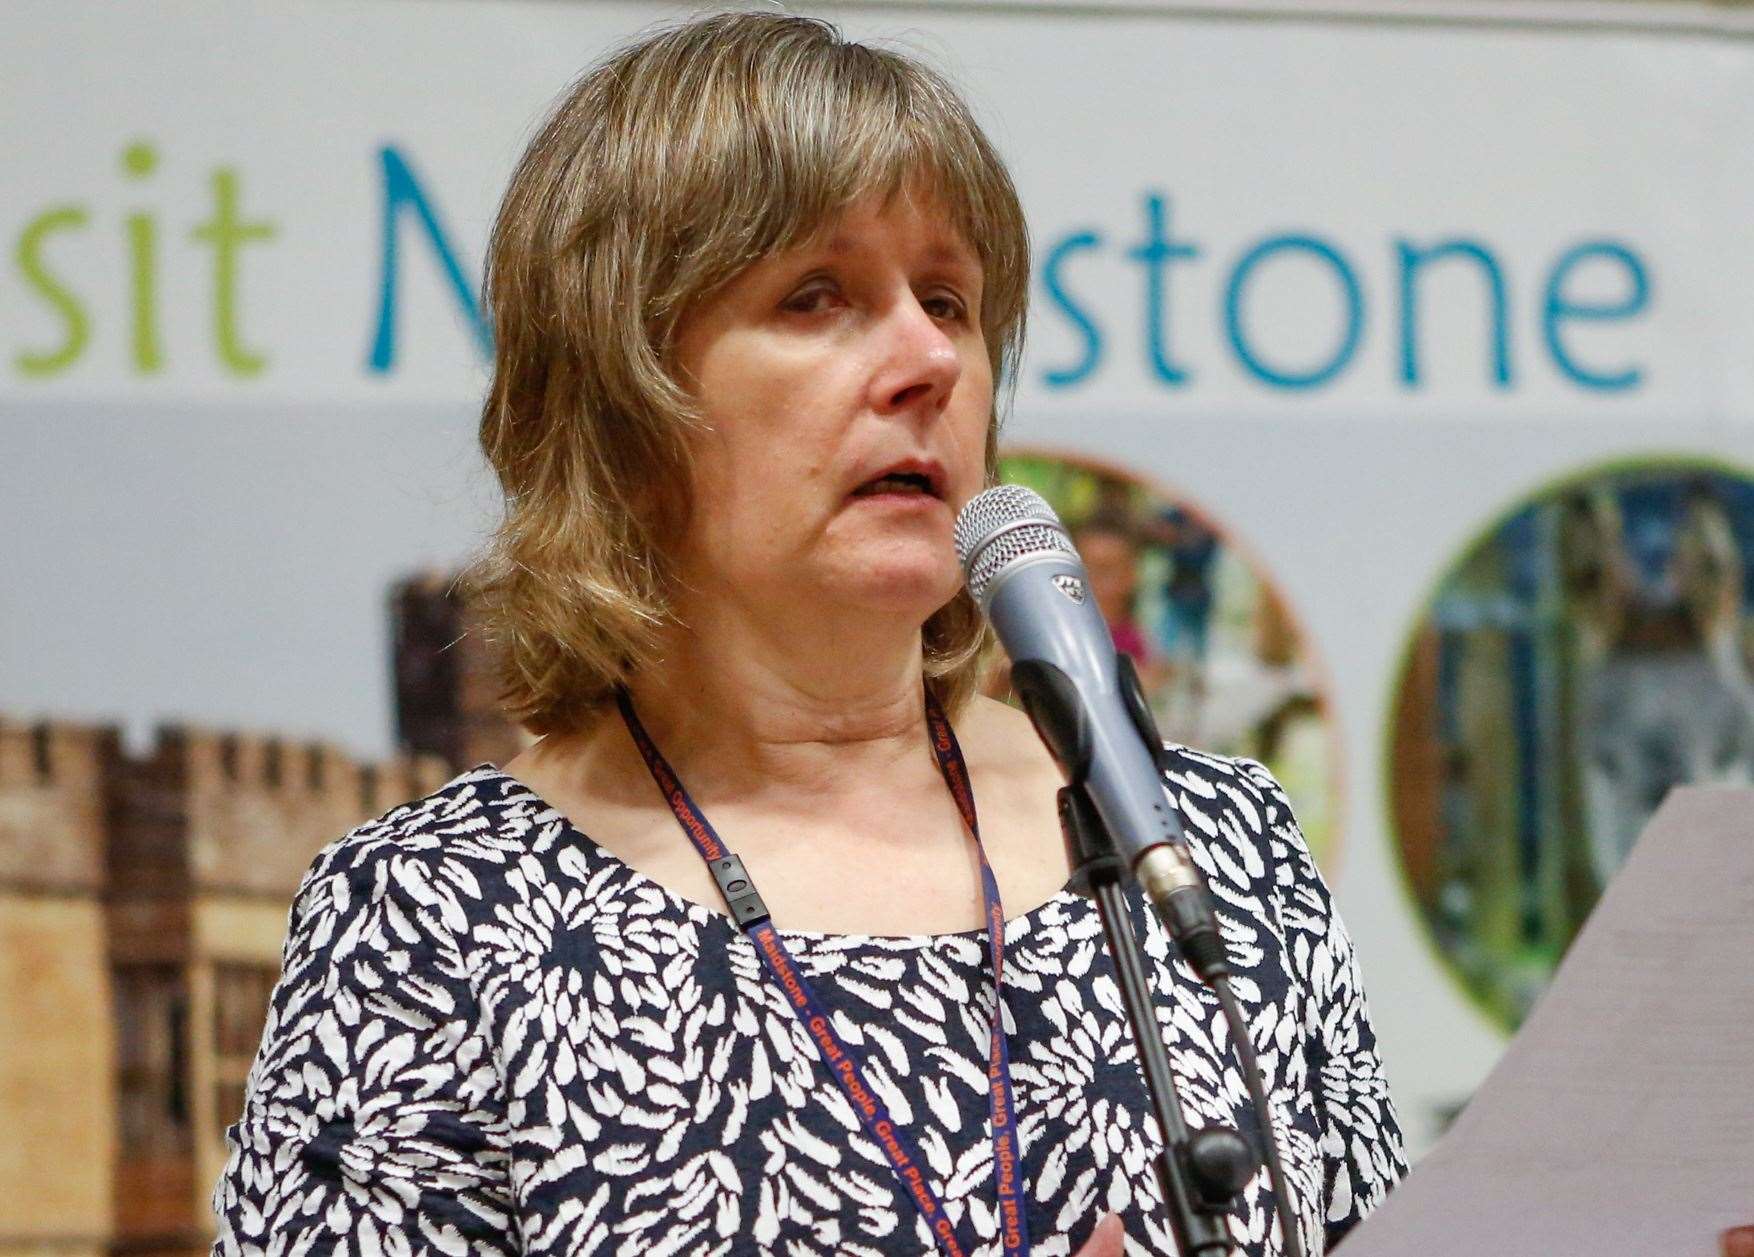 Maidstone Borough Council chief executive Alison Broom